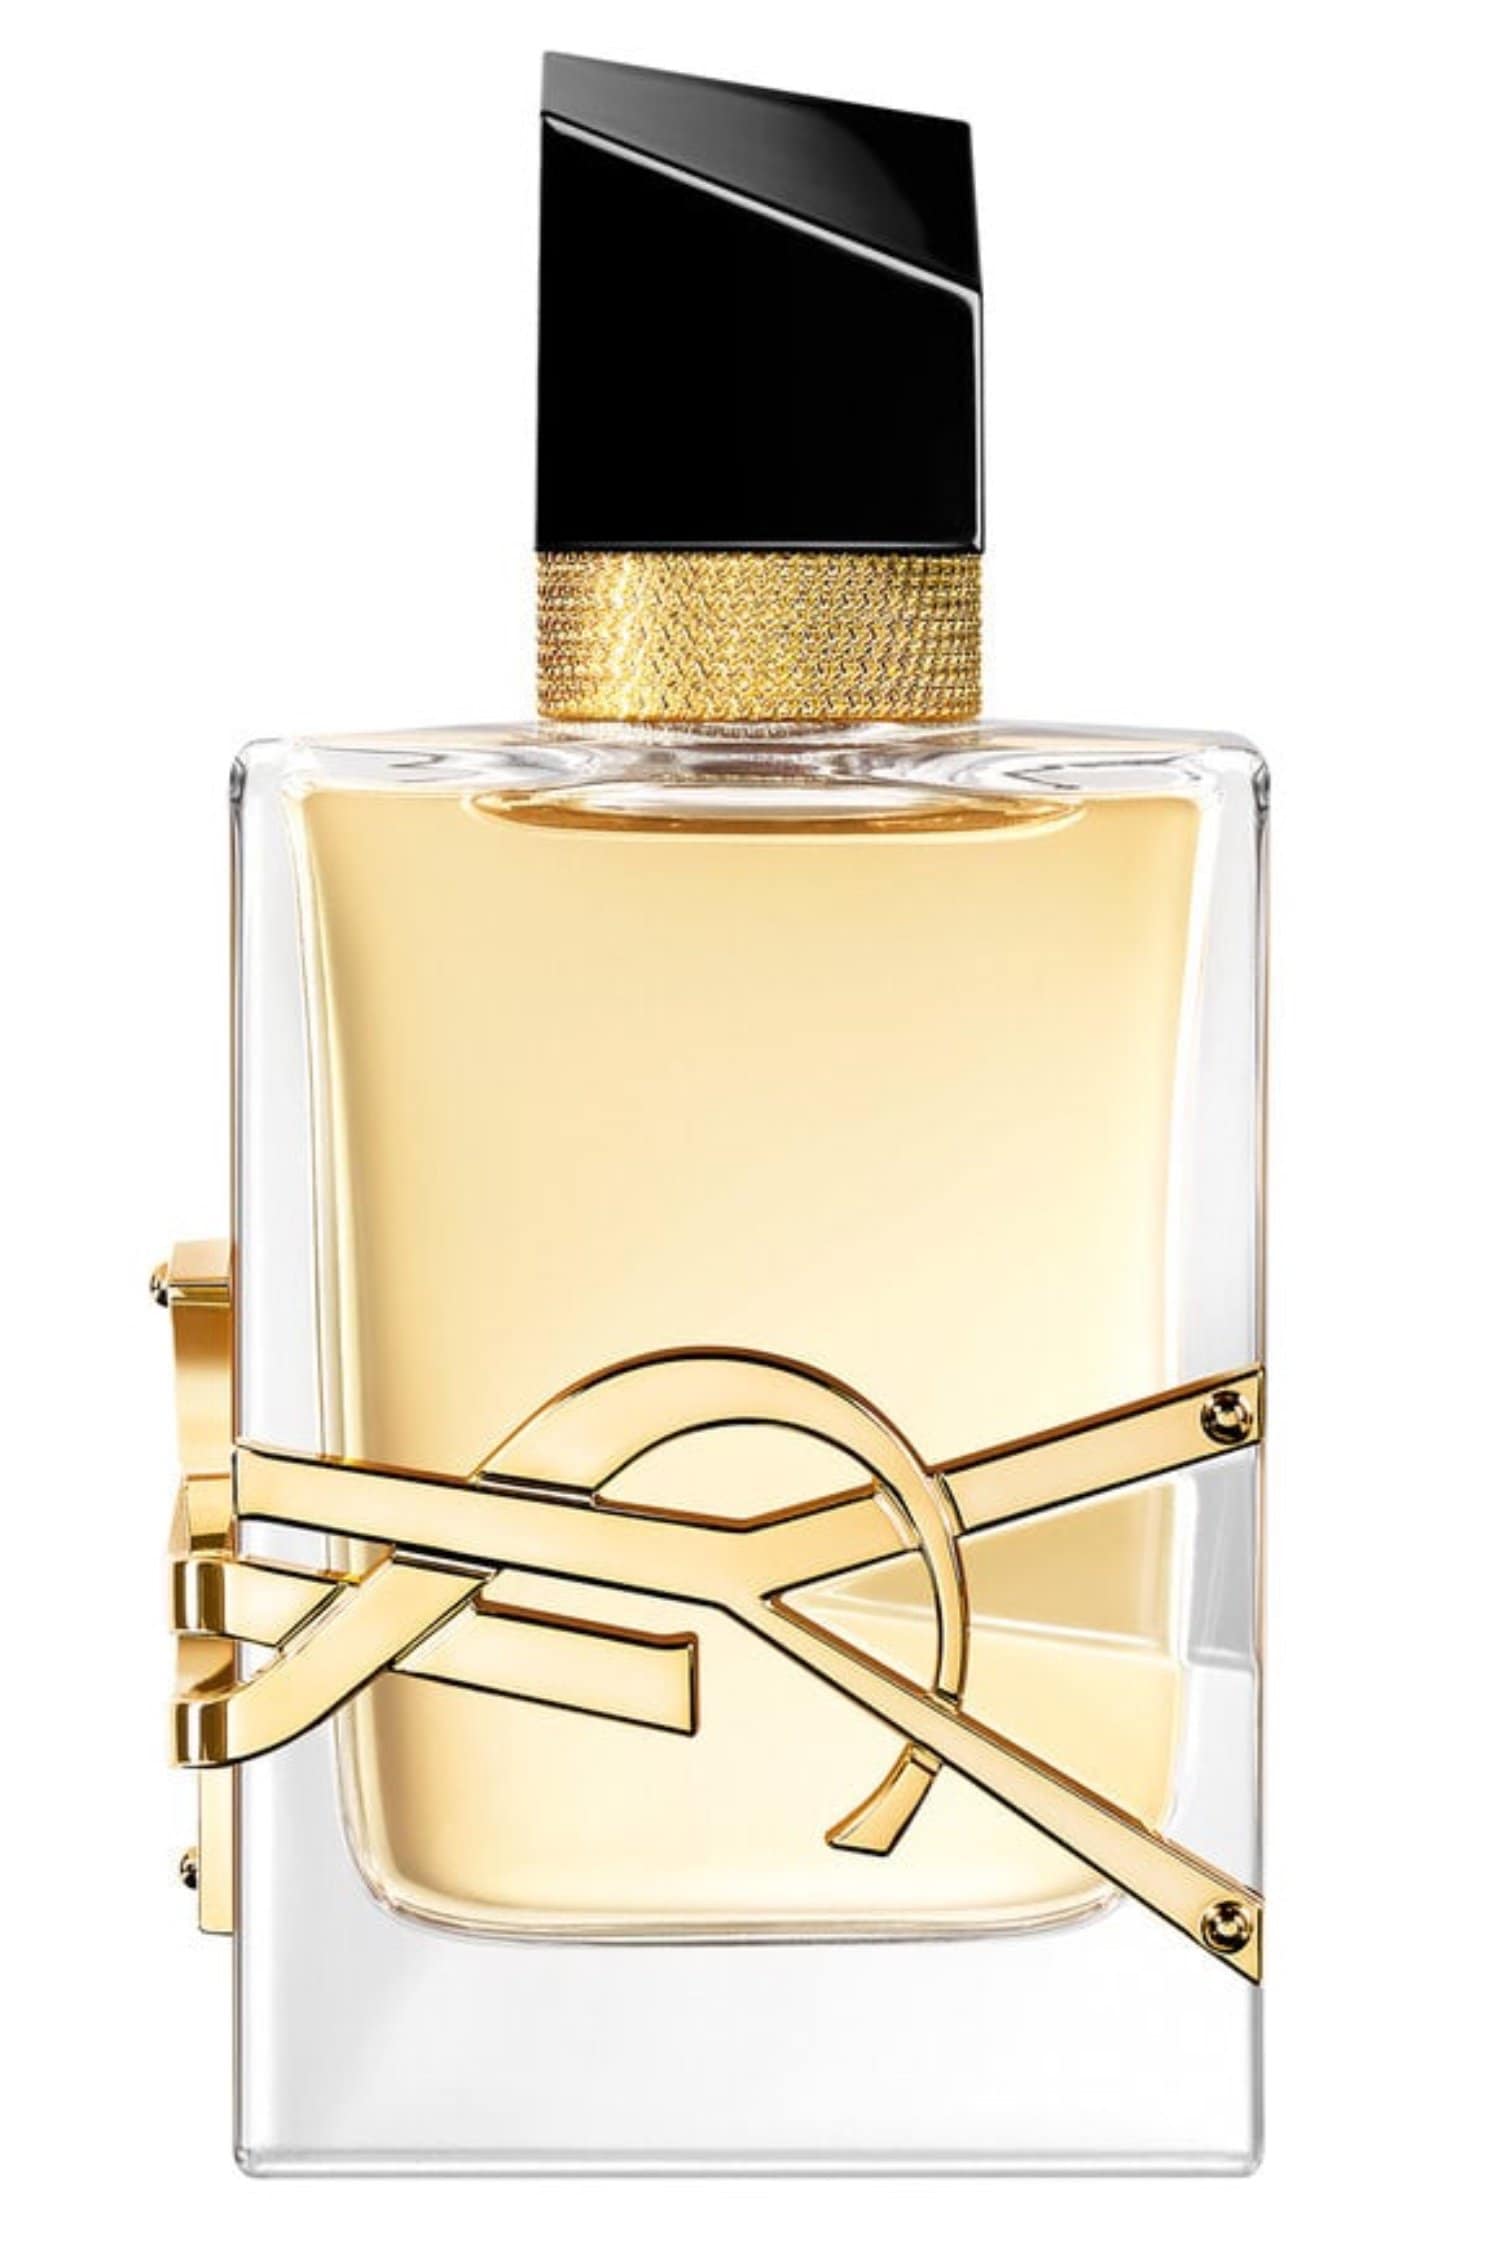 Yves Saint Laurent, perfume, beauty